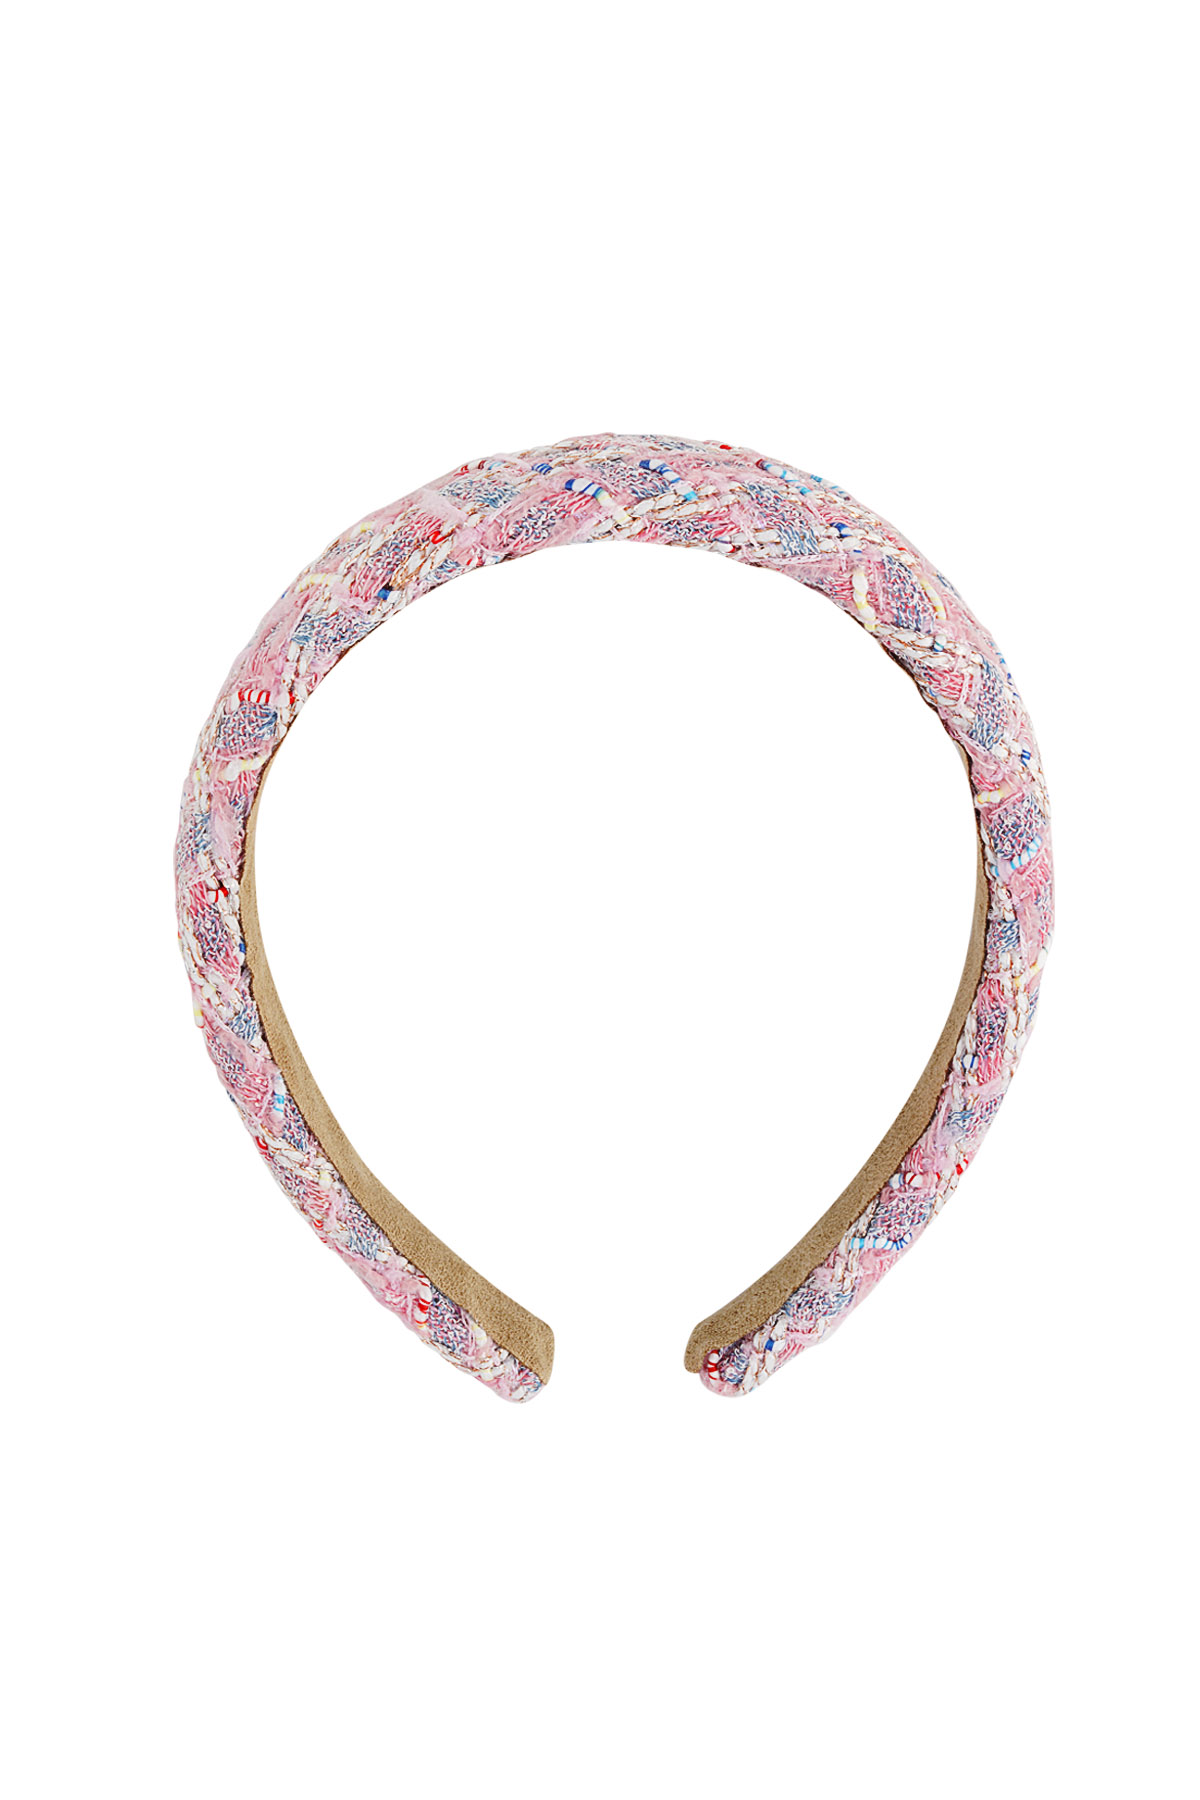 Haarband grob gemustert - blau/rosa Kunststoff